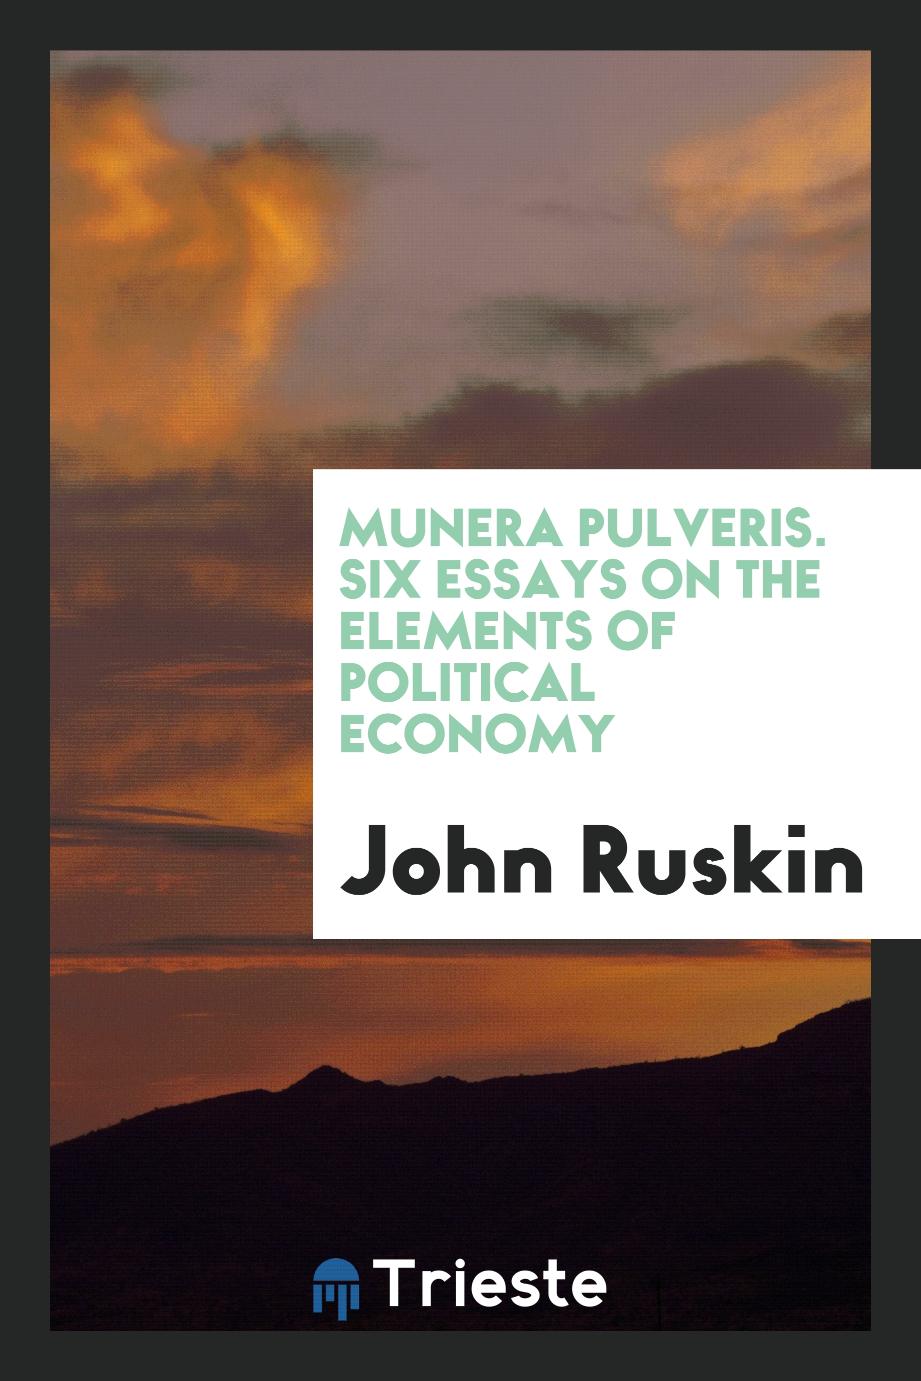 Munera pulveris. Six essays on the elements of political economy